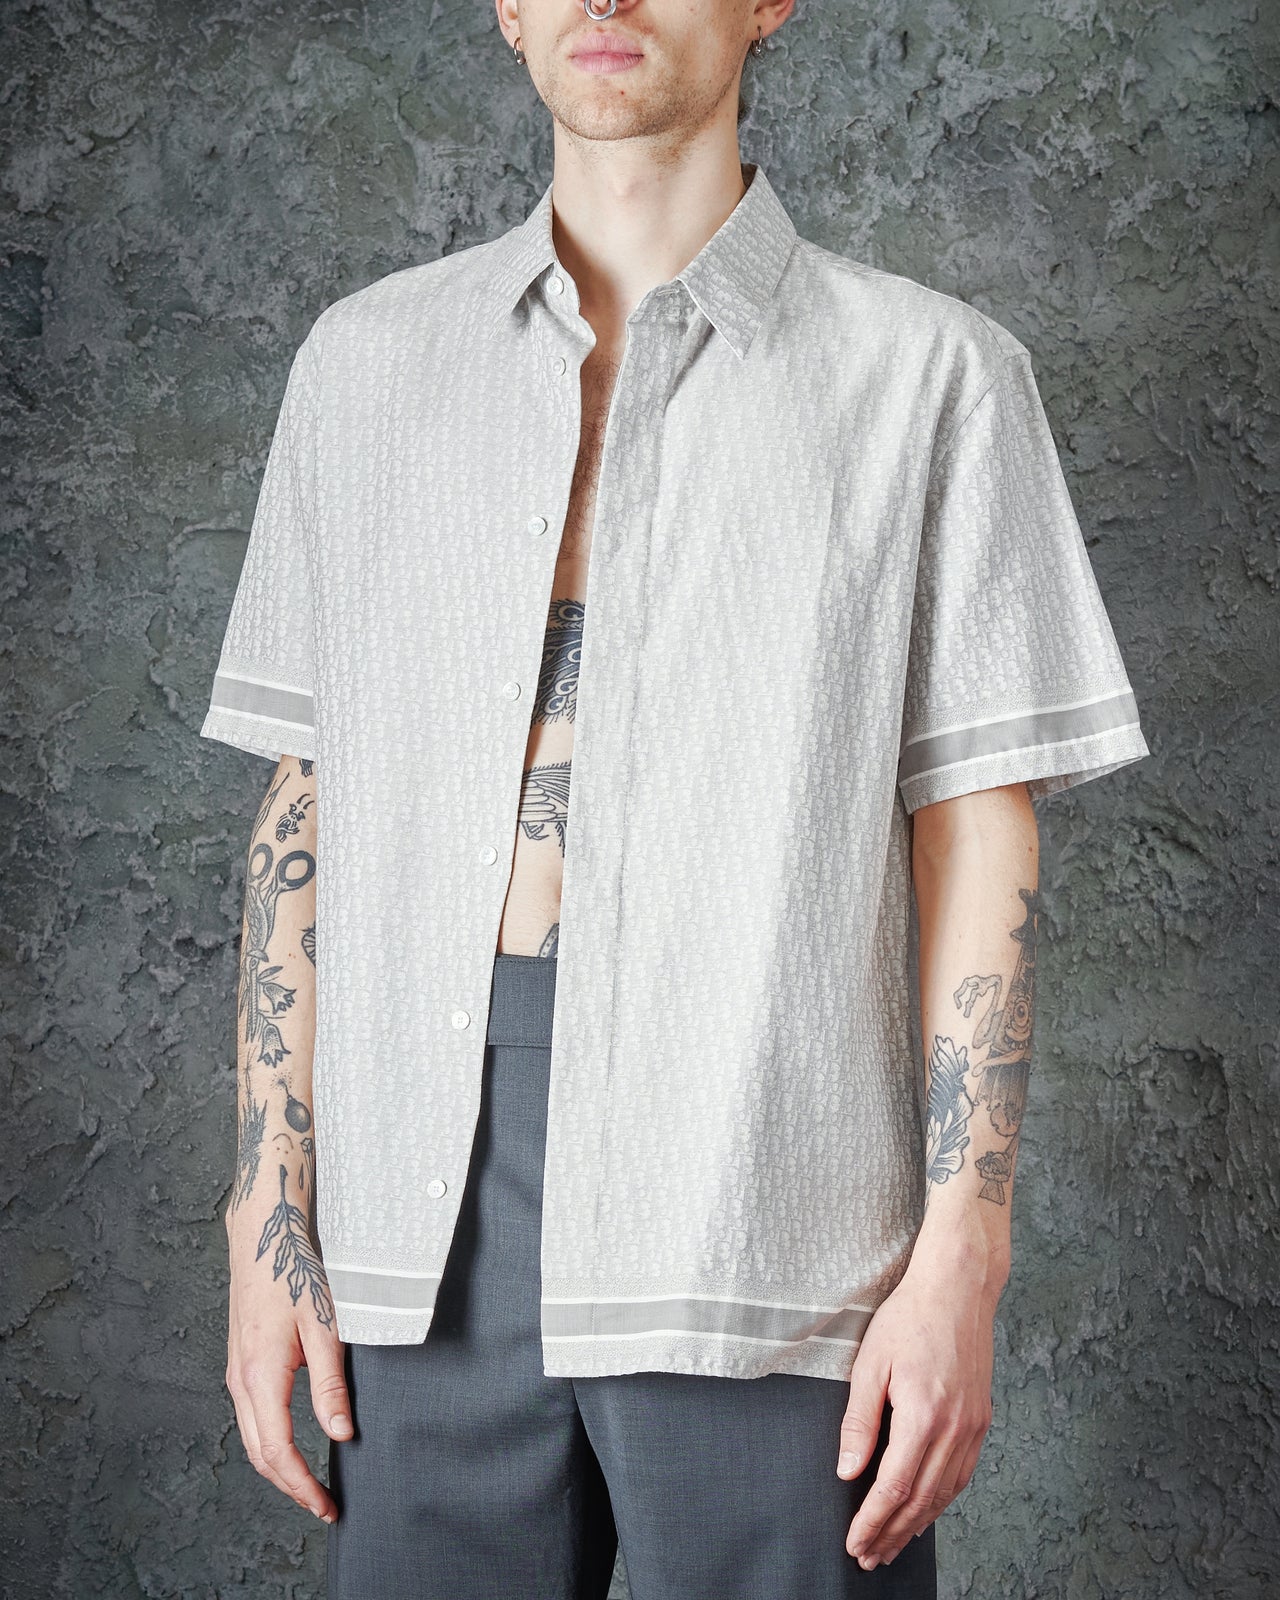 Dior x Daniel Arsham SS 2020 Oblique Short-Sleeve Shirt